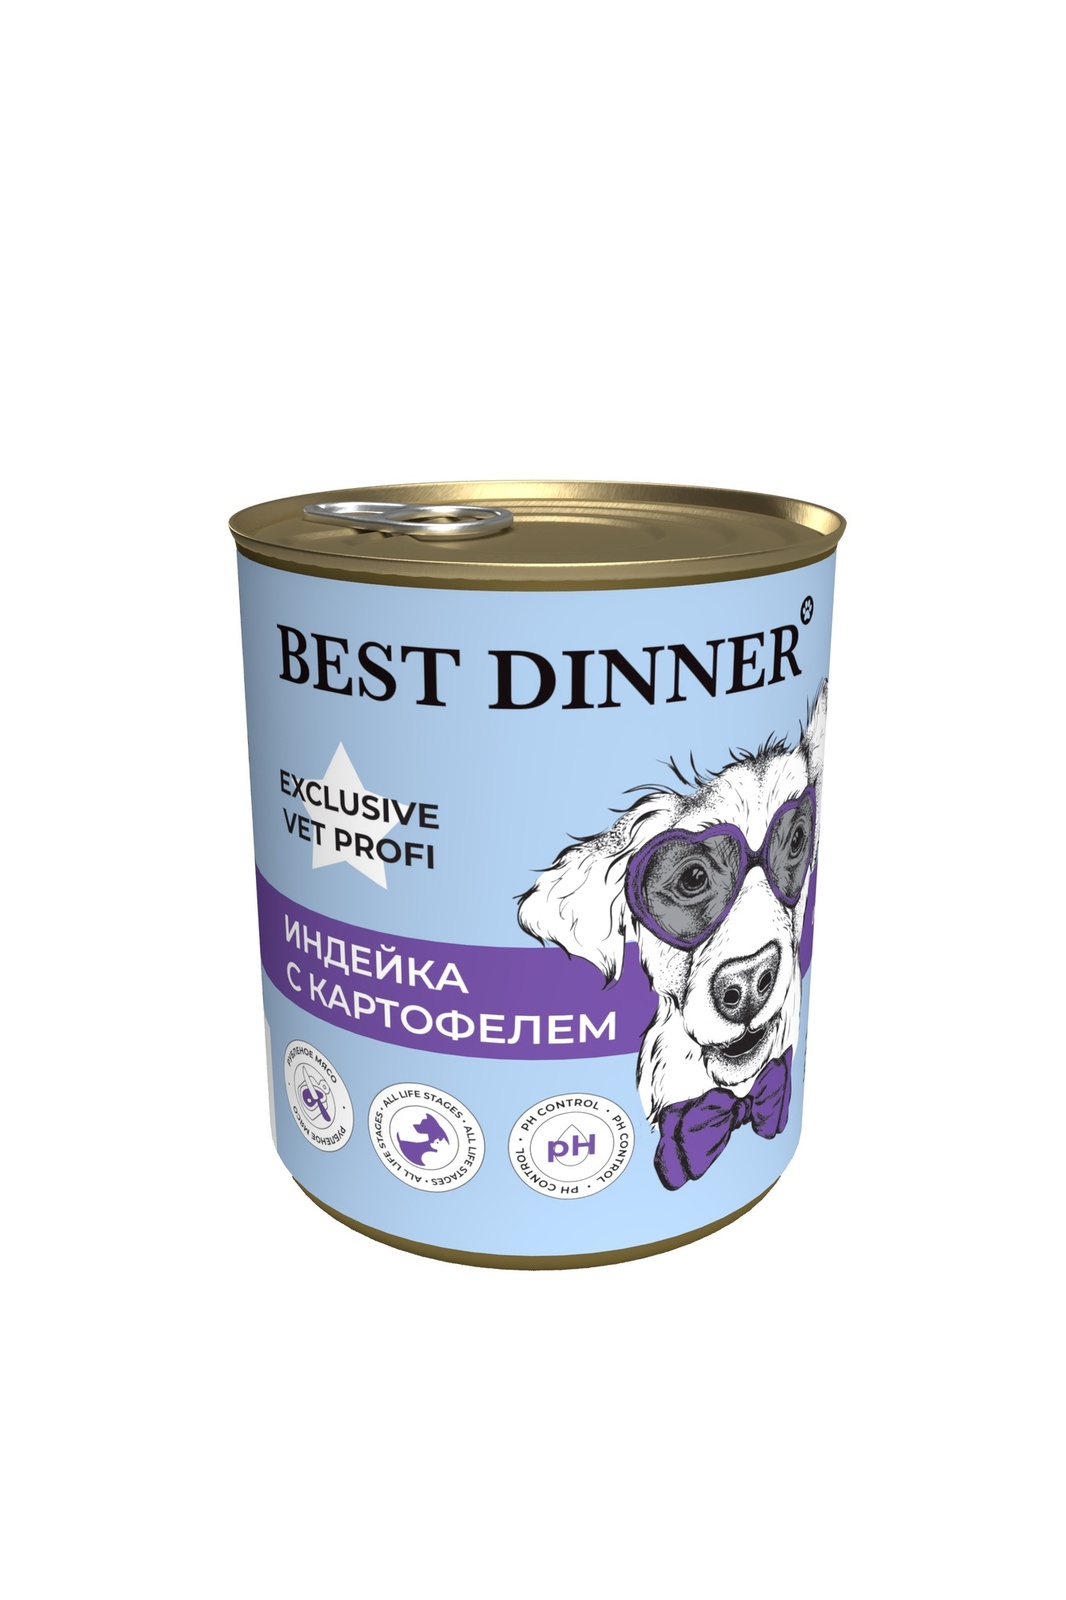 Best Dinner Best Dinner консервы для собак Exclusive Urinary Индейка с картофелем (340 г) best dinner best dinner консервы для собак super premium с перепелкой 340 г